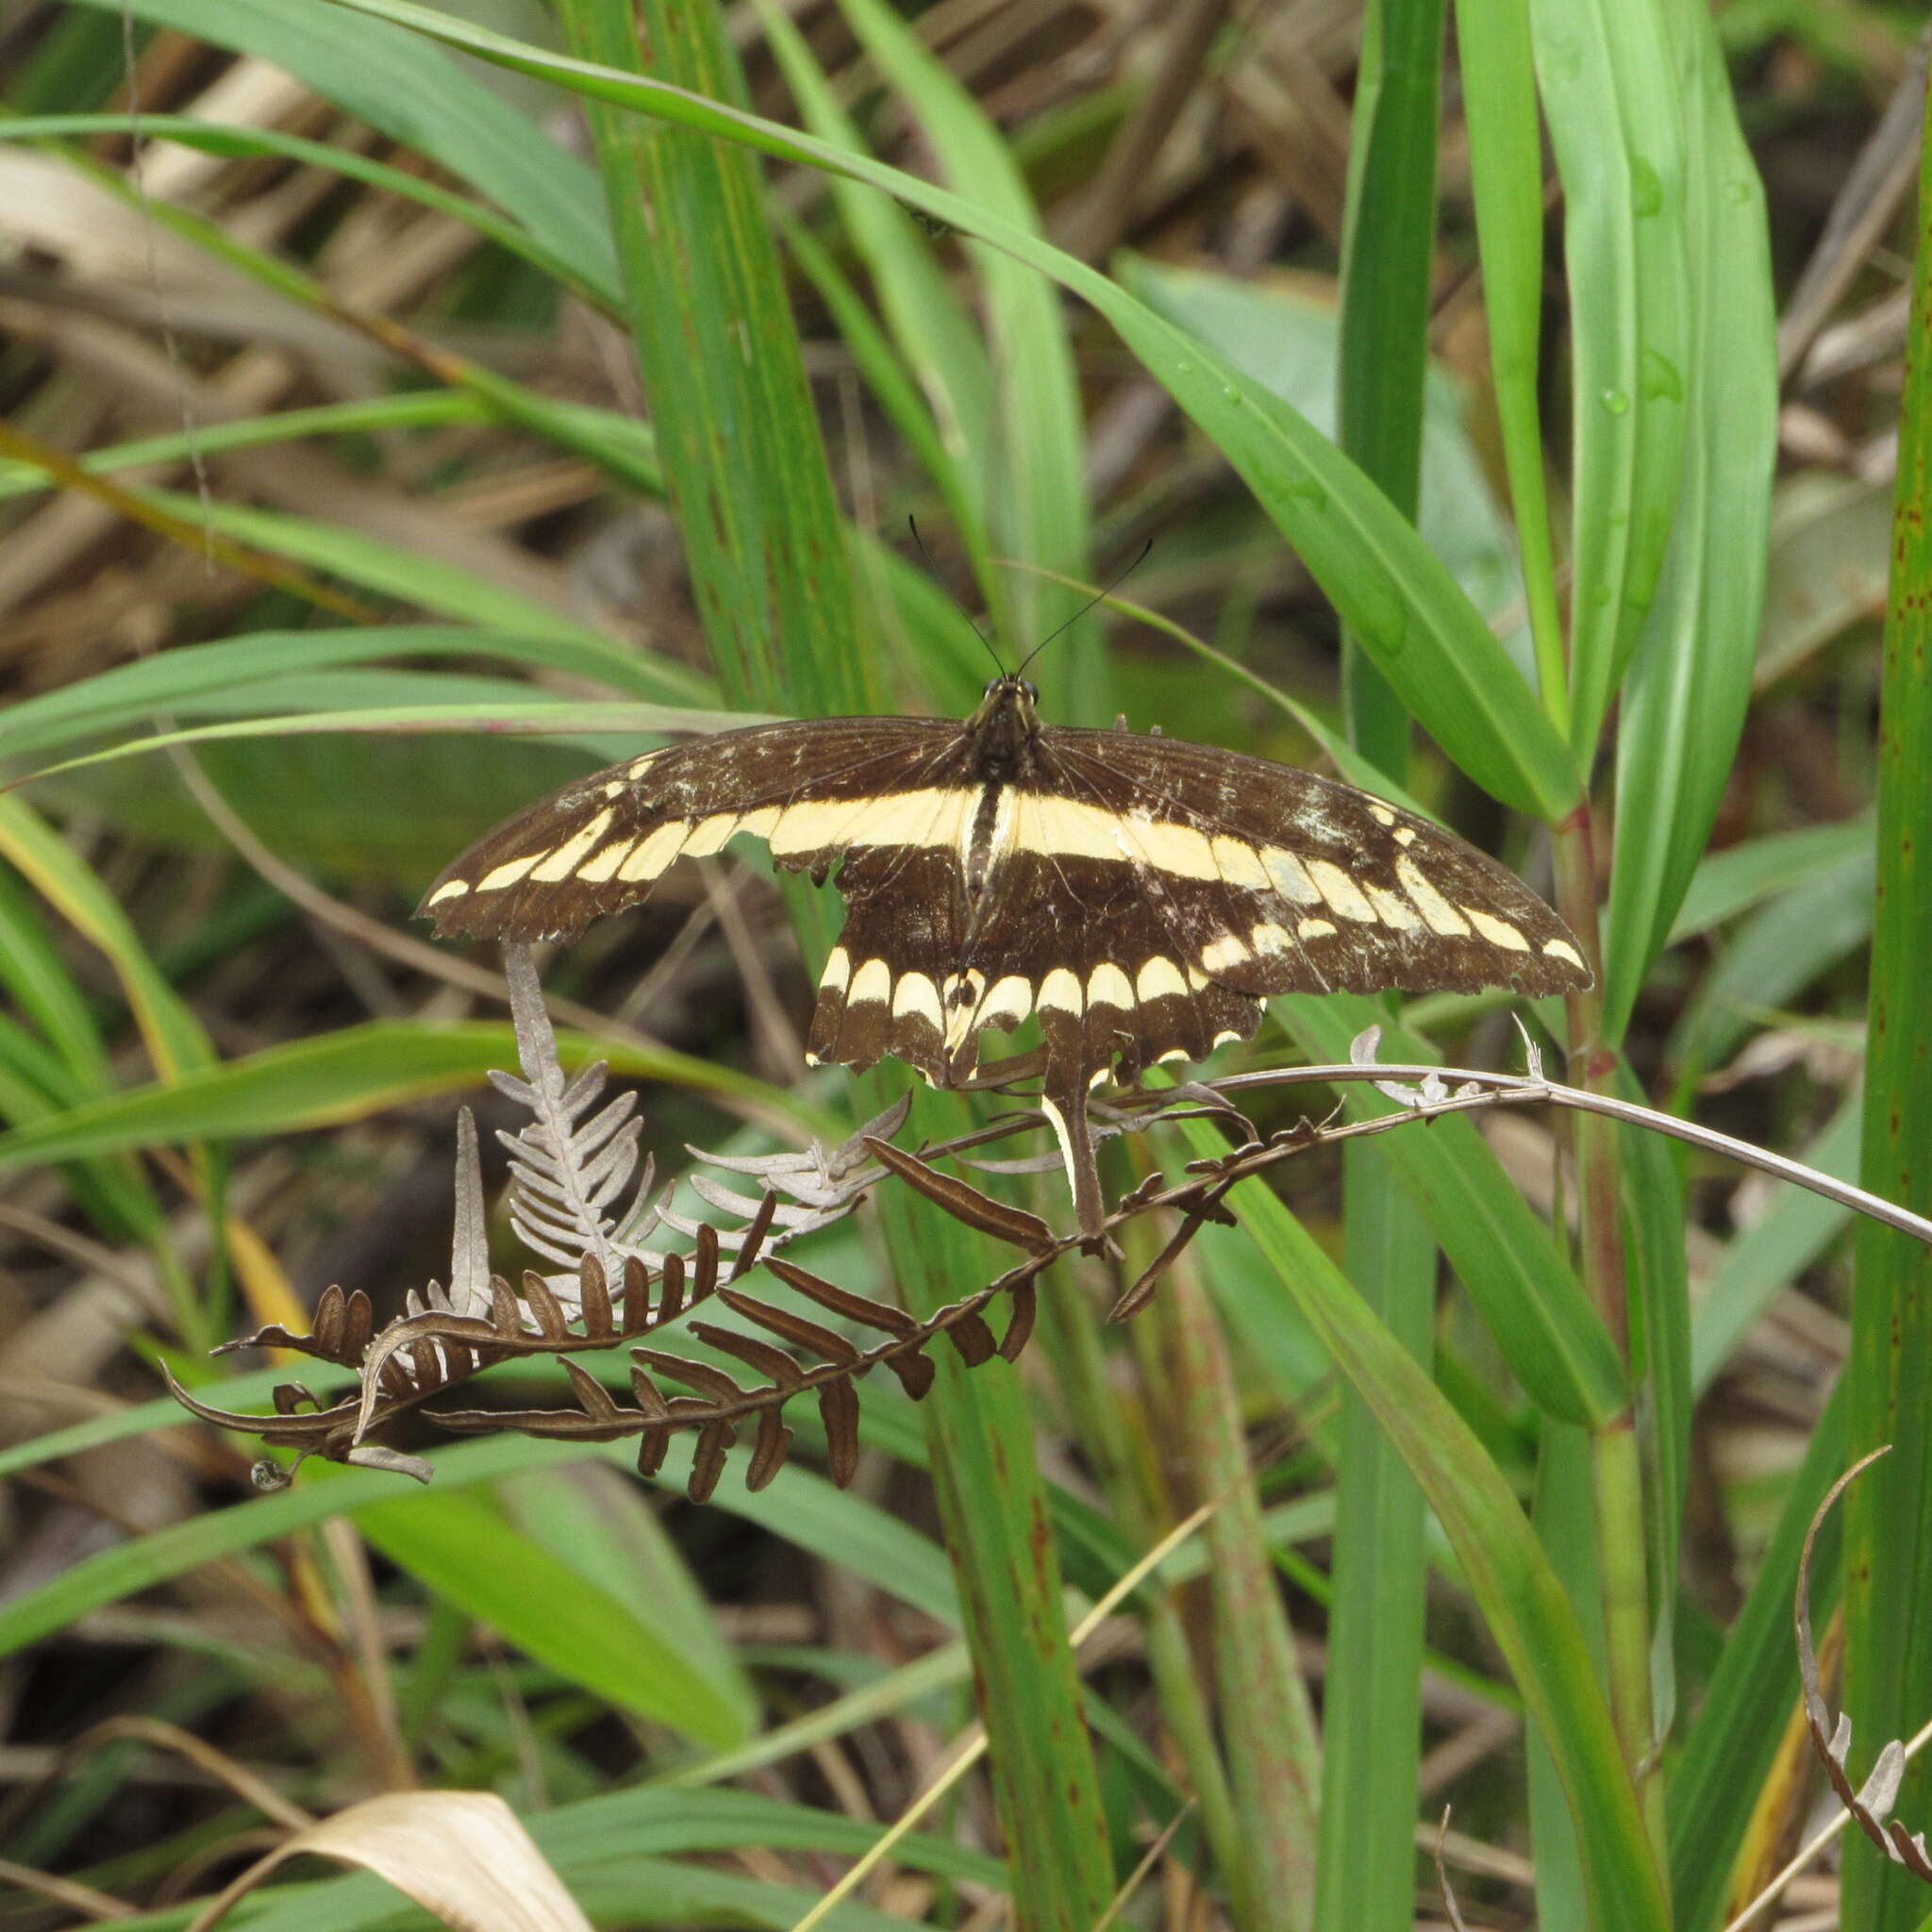 Image of Papilio paeon Boisduval 1836